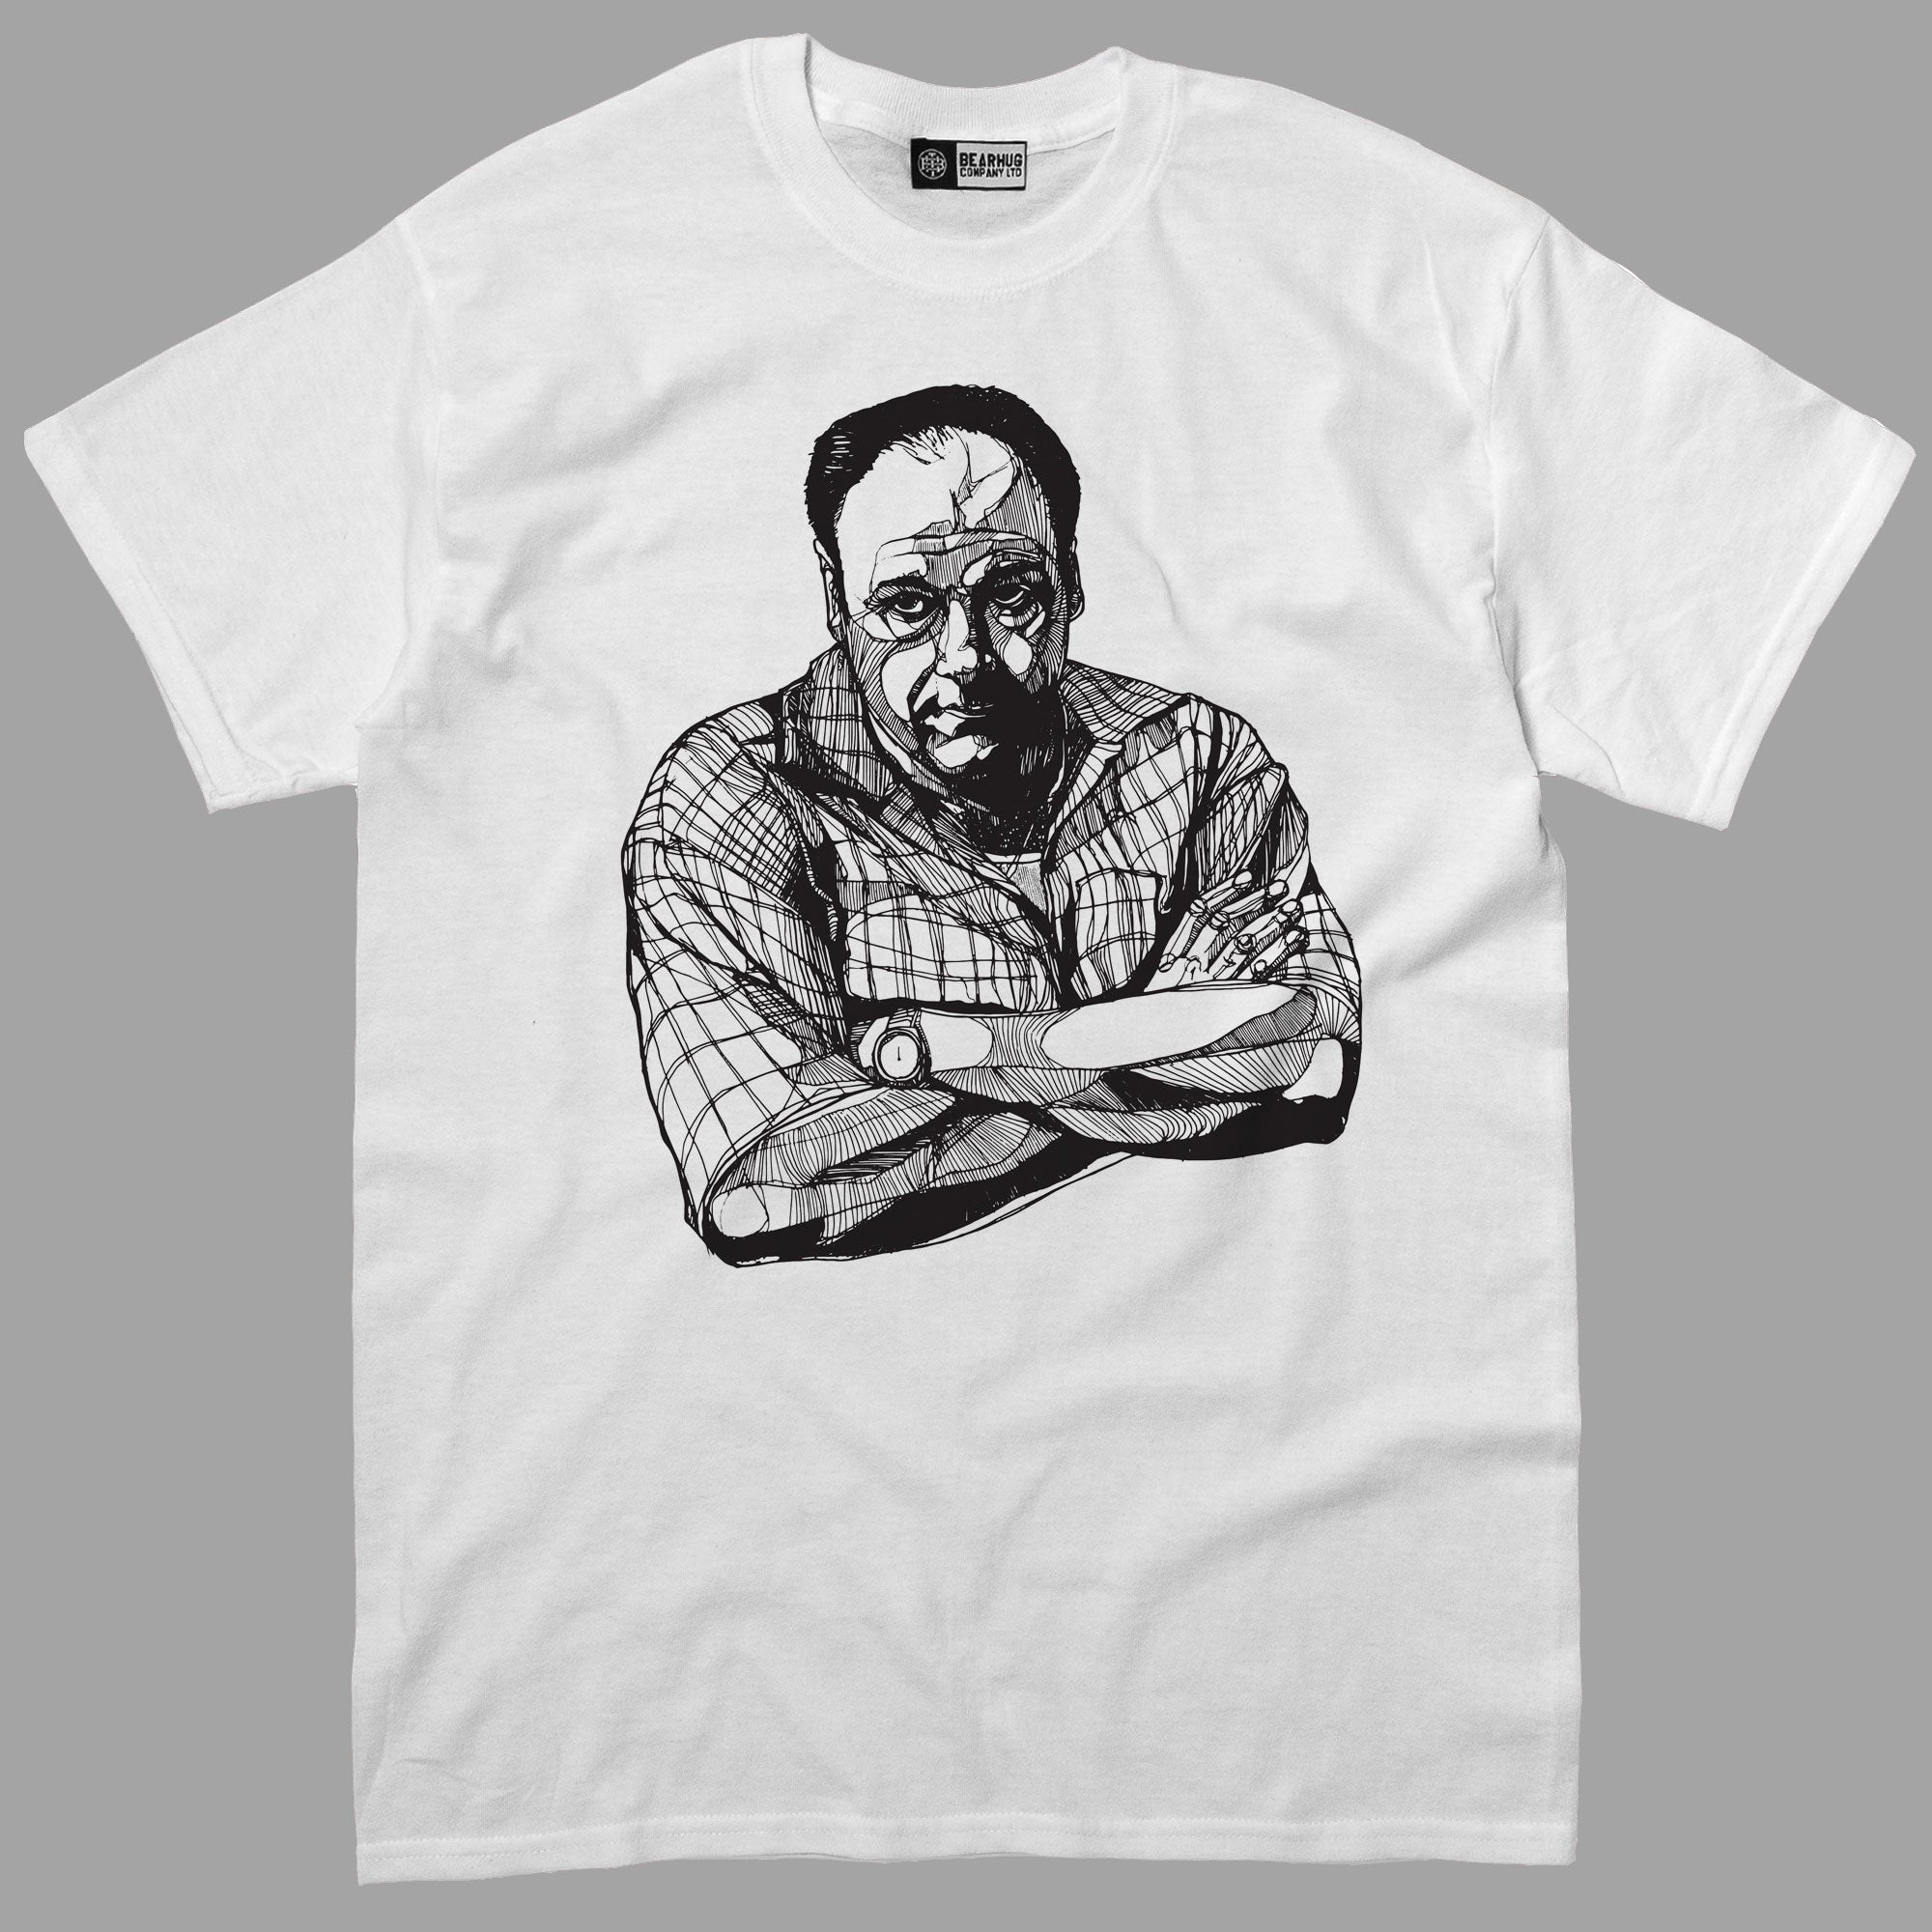 Tony Soprano - The Sopranos - White T-Shirt